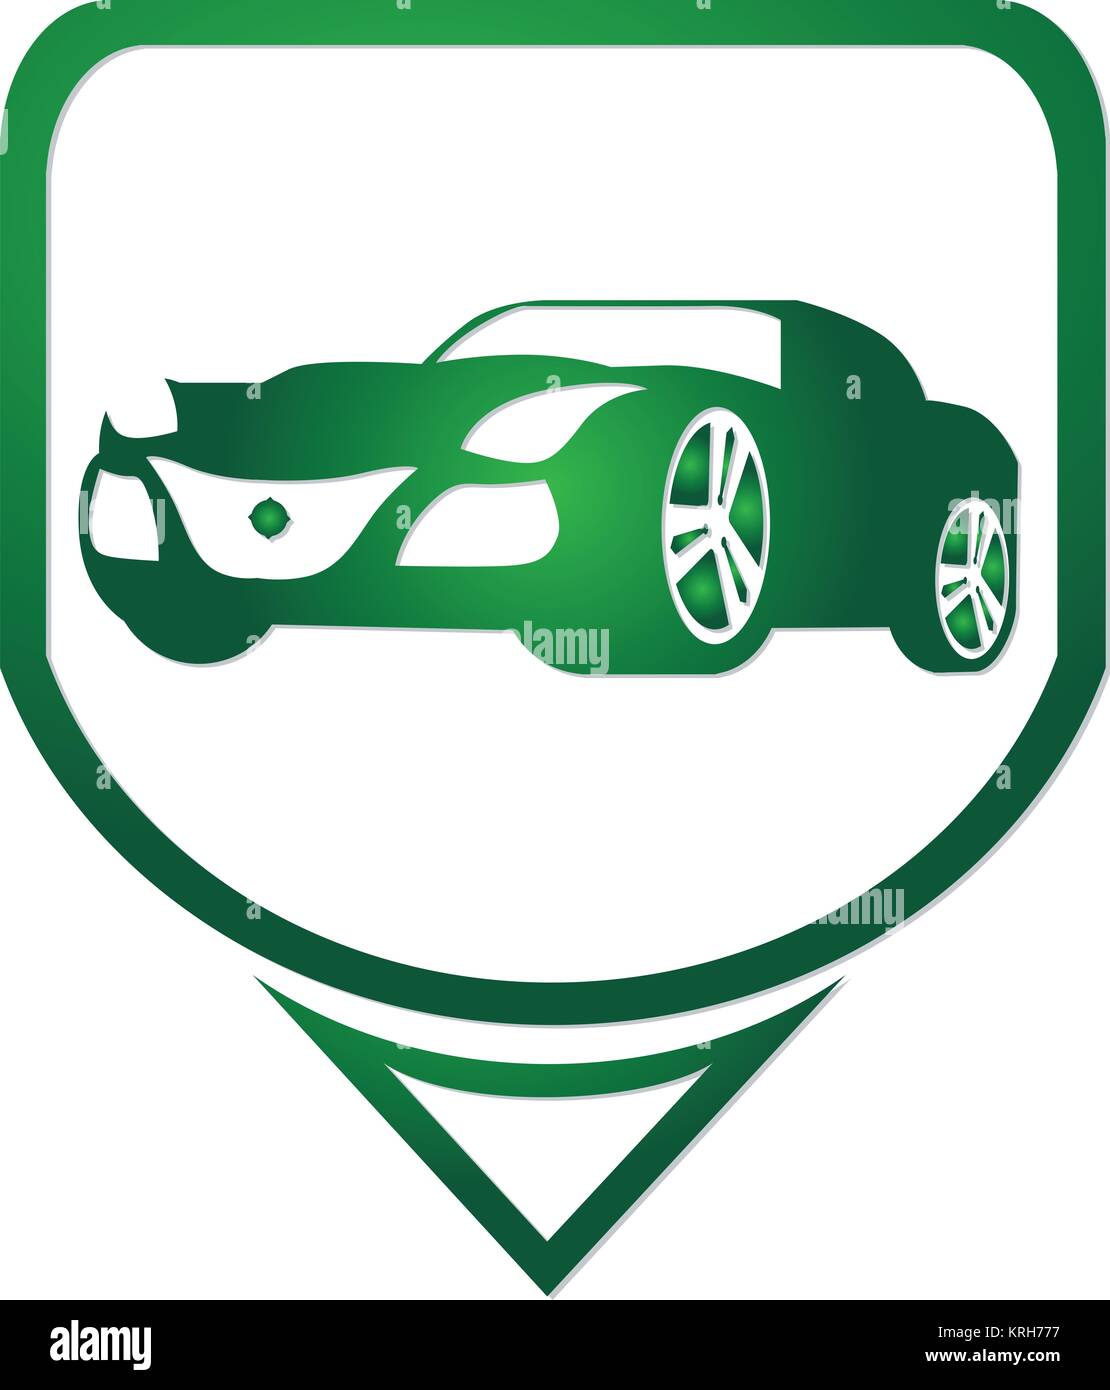 fast car icon symbols Stock Photo